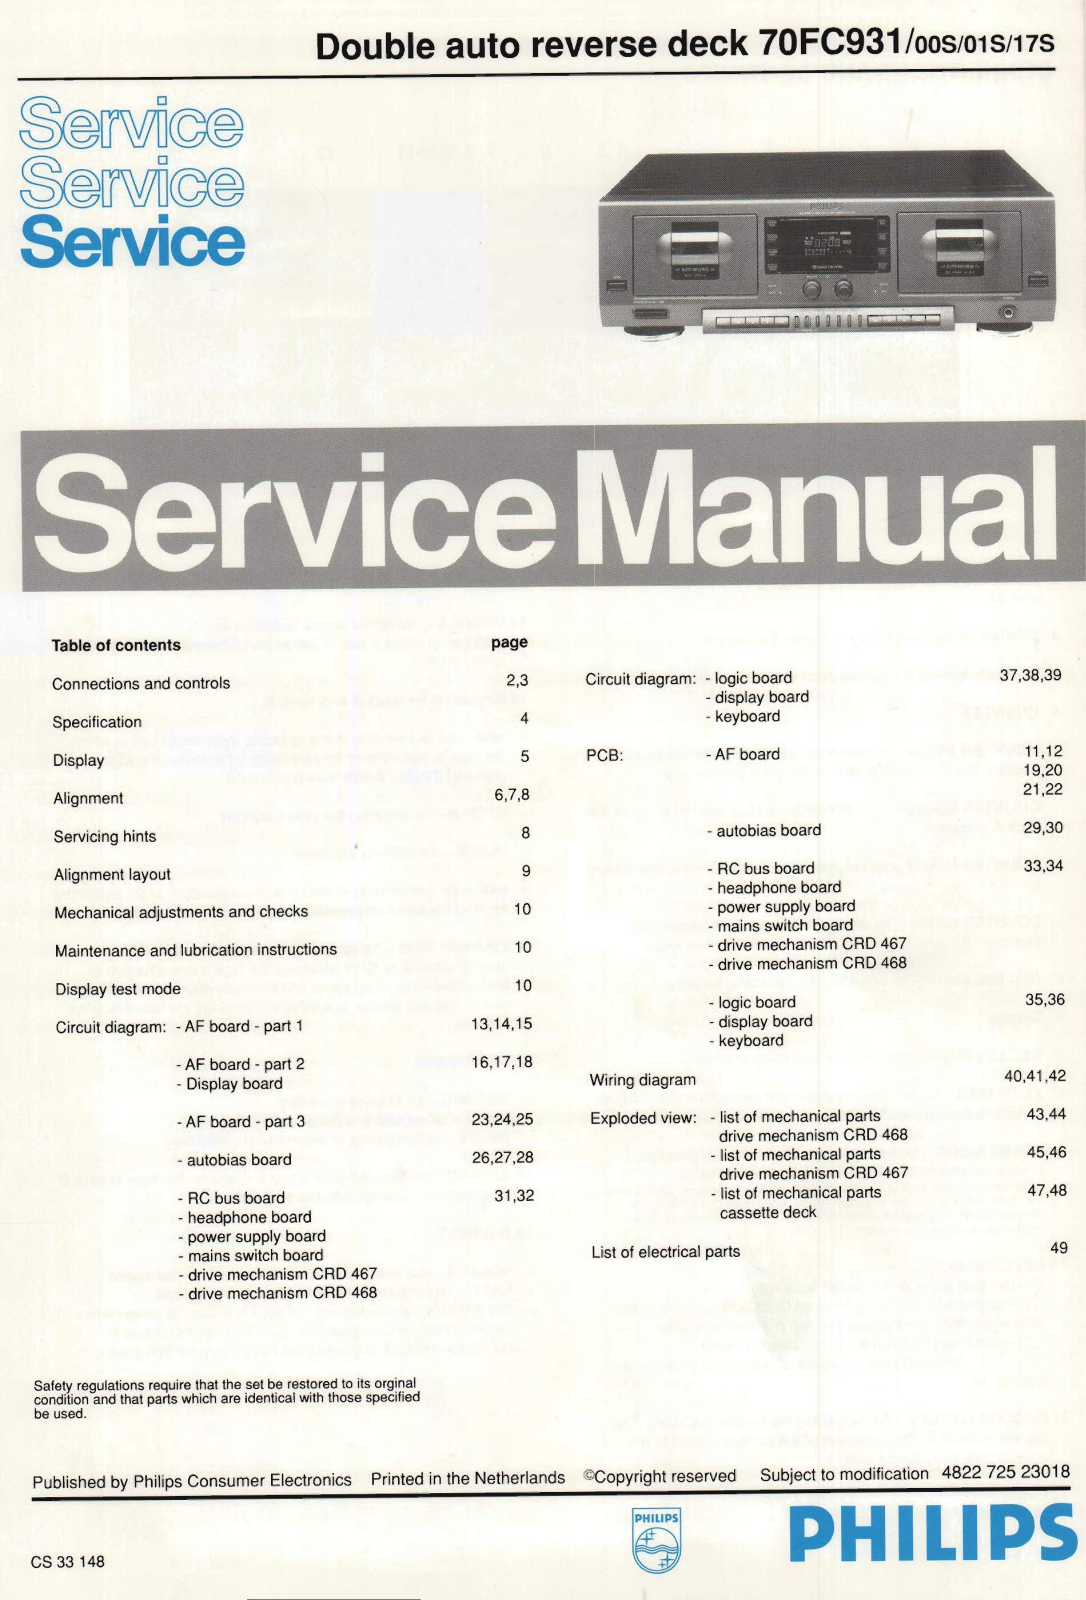 Philips 70-FC-931 Service Manual